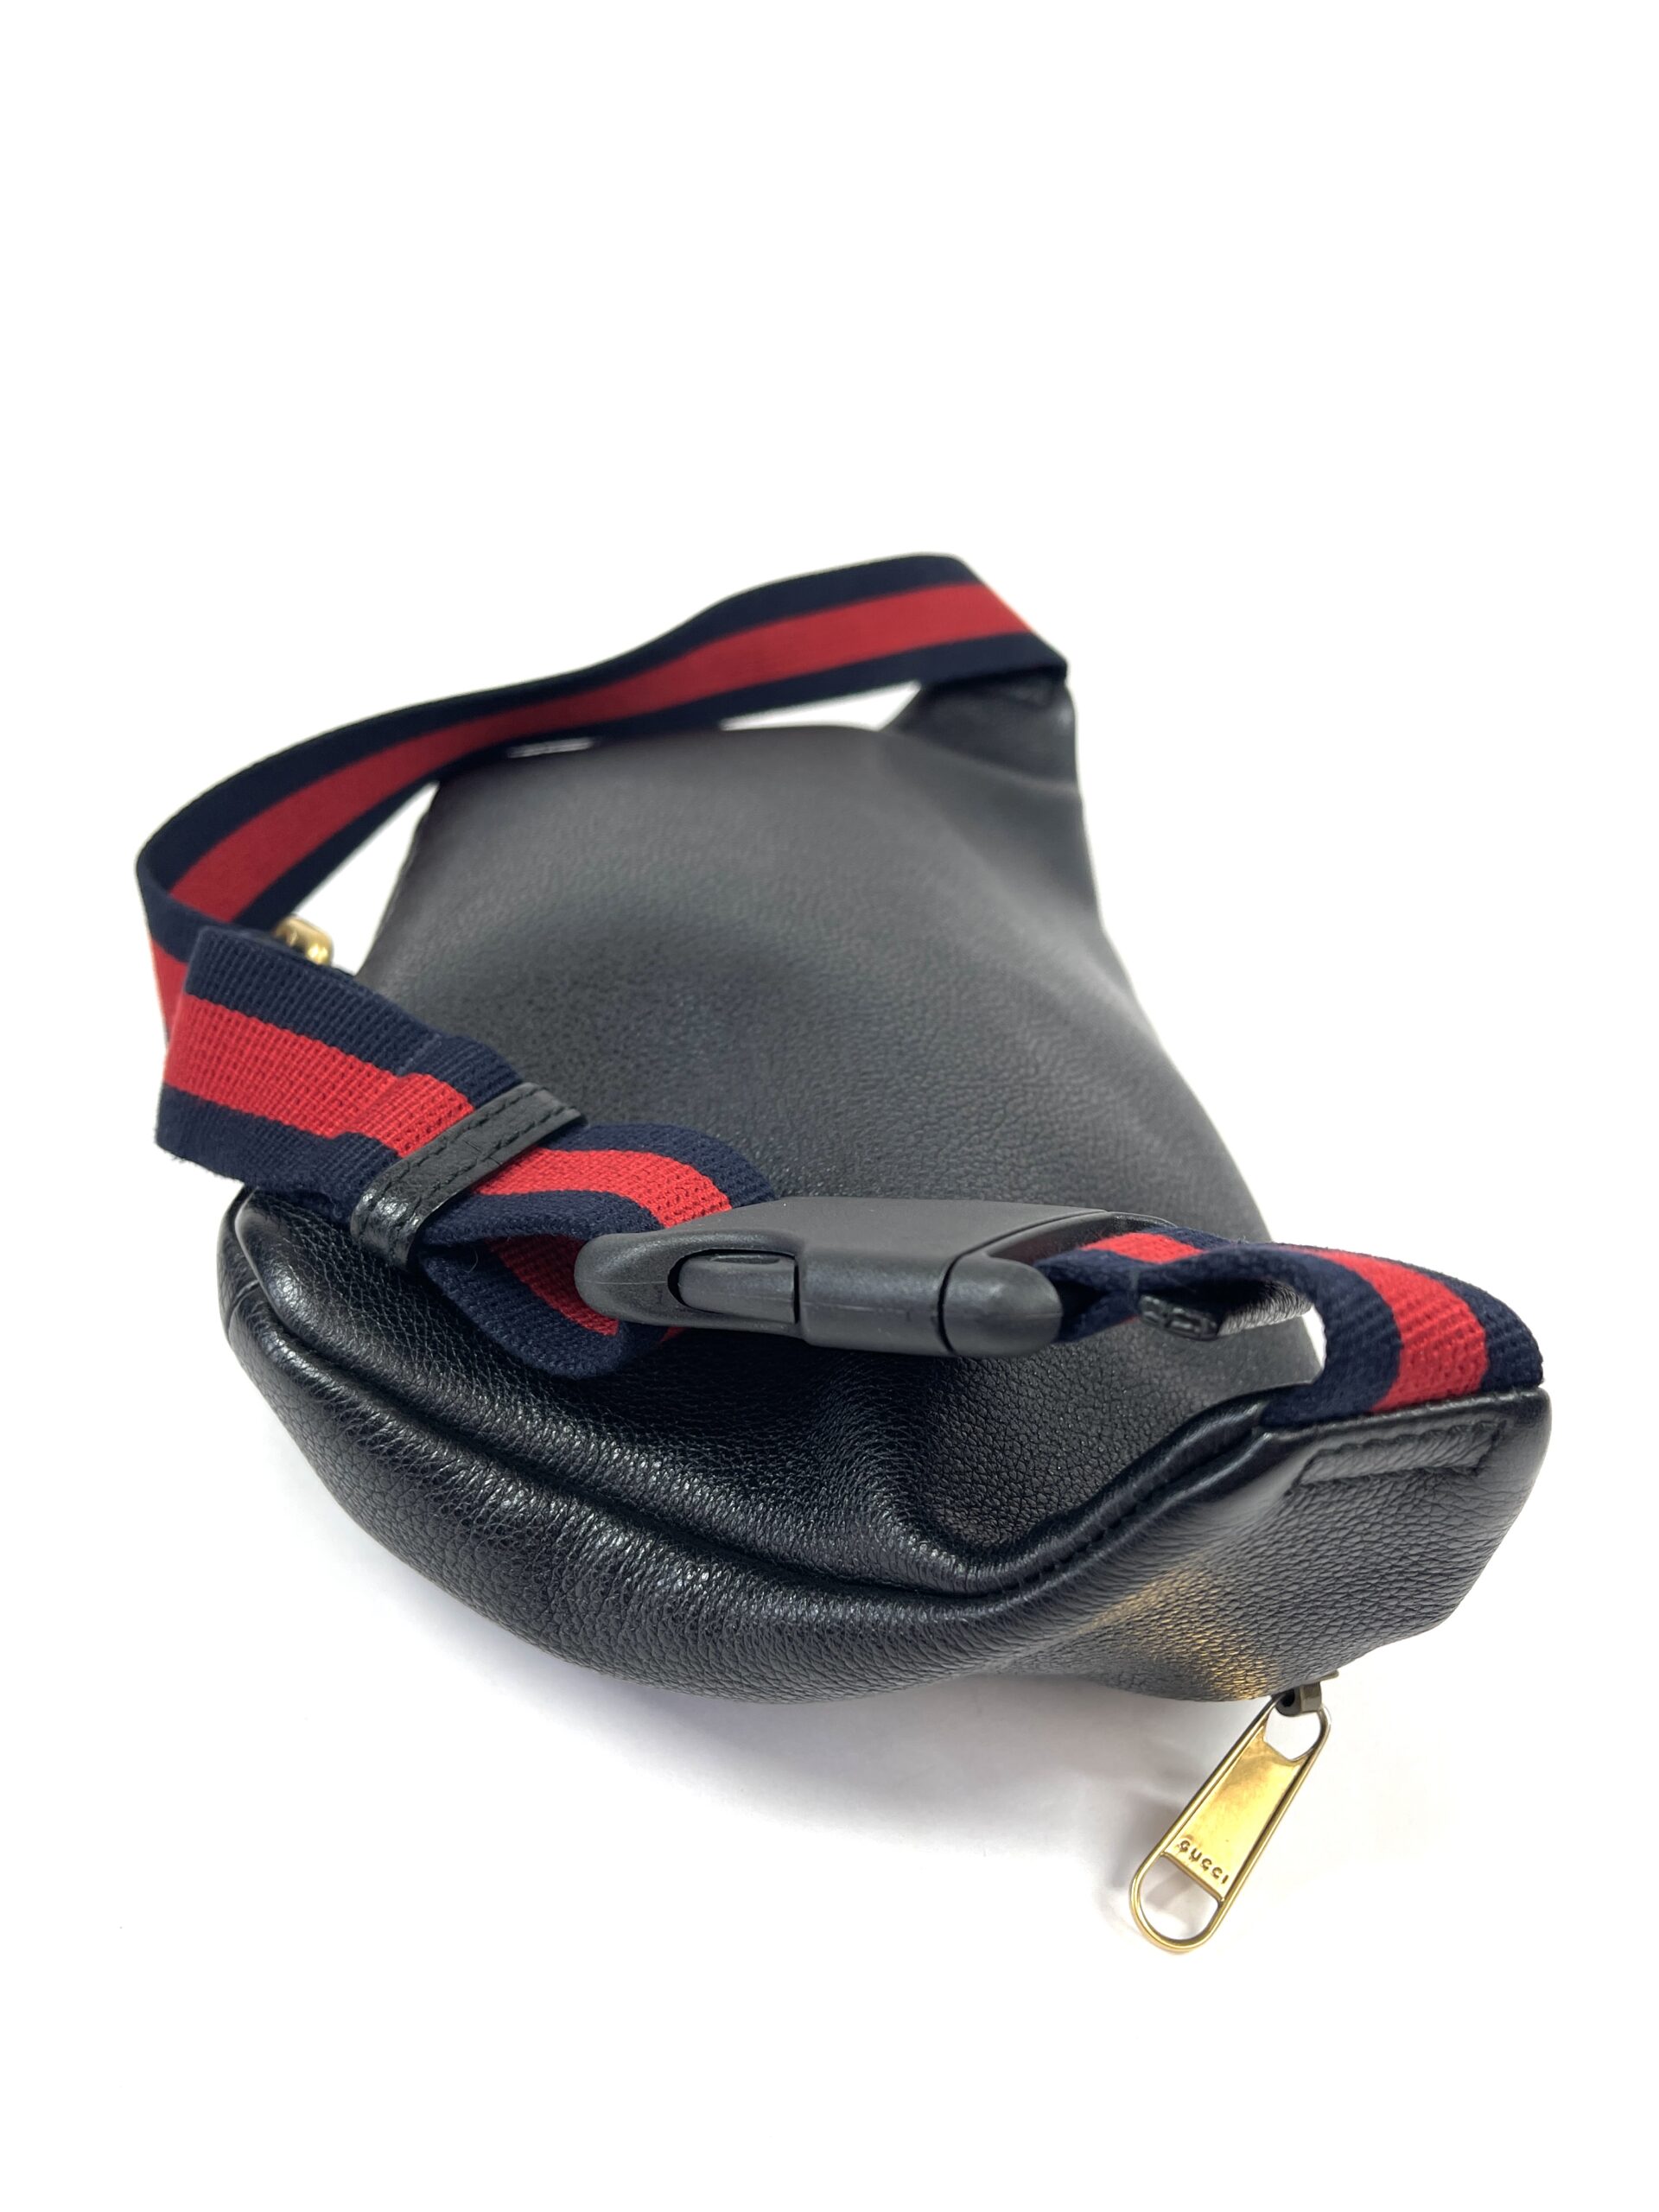 Auth GUCCI GG RED Waist Pouch Bum bag Shoulder Belt Bag Pack